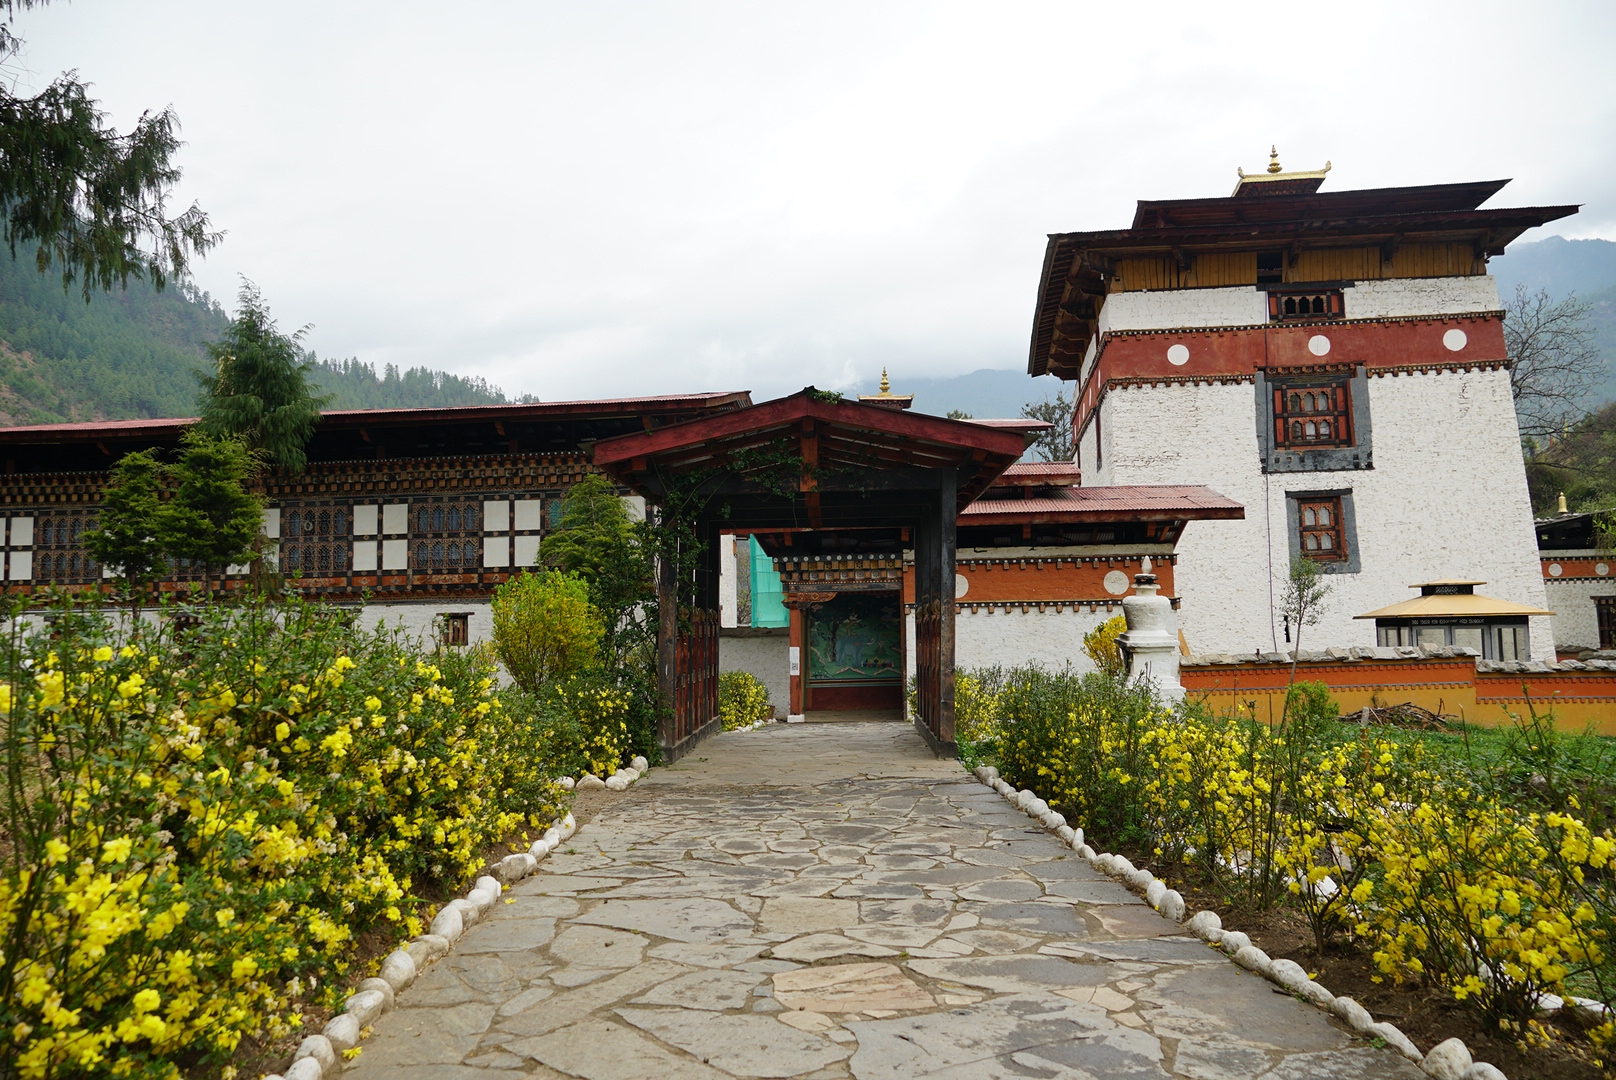 Pangri Zampa Monastery